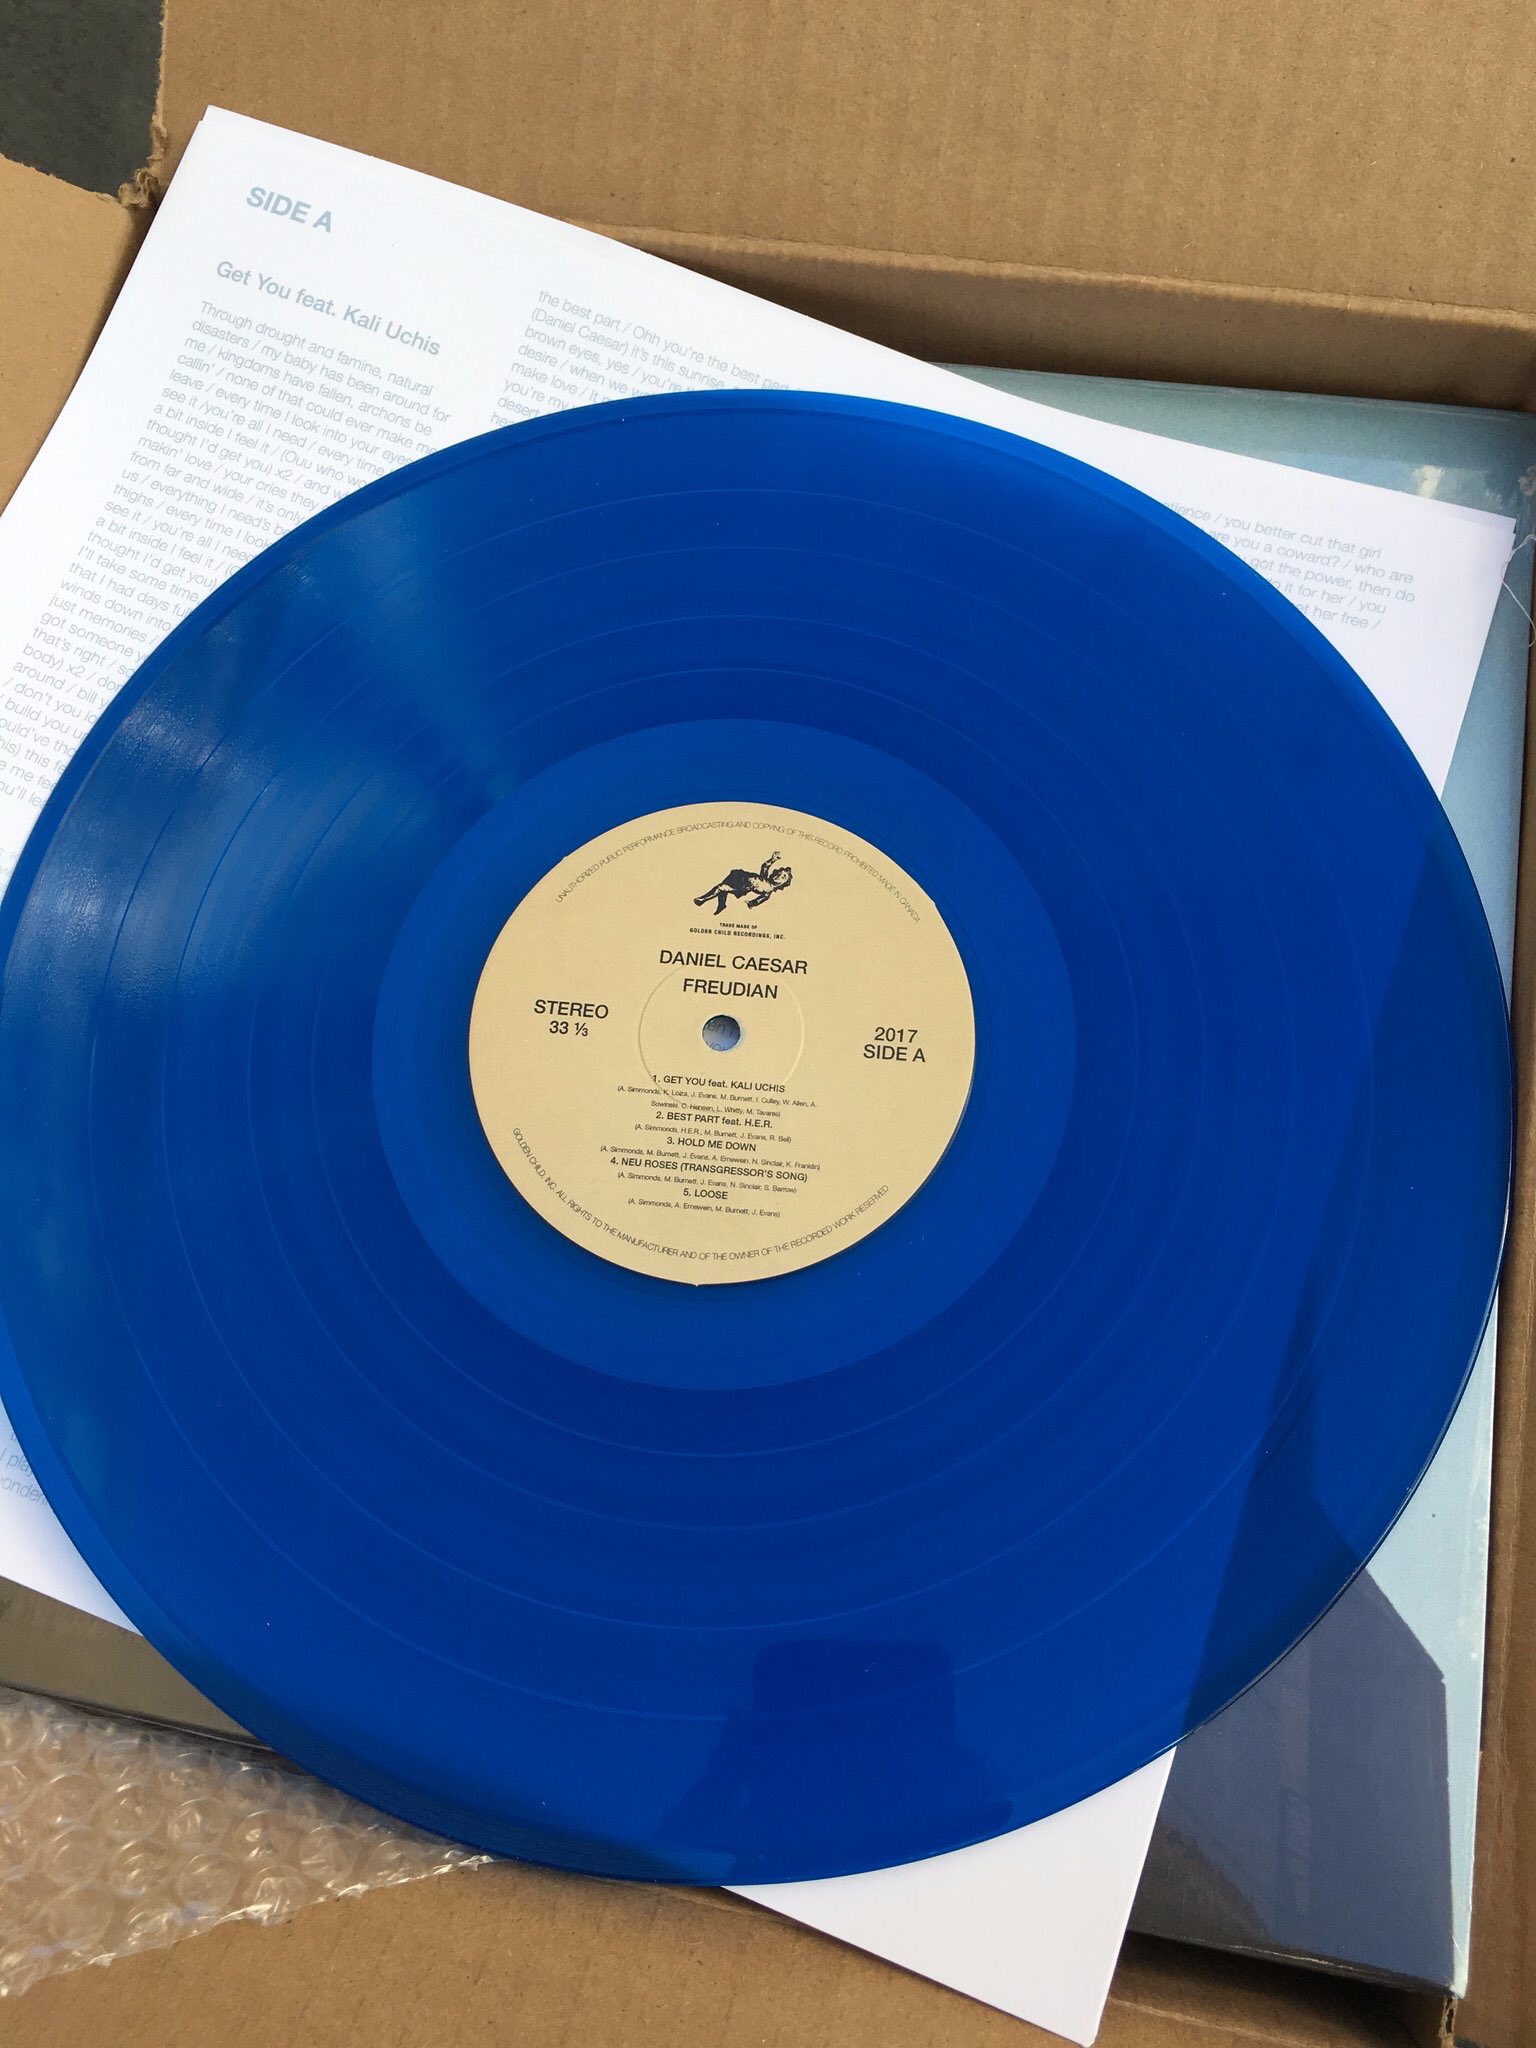 Kevin Klausz on Twitter: "@DanielCaesar @byseanbrown @keavanx are ever going to freudian vinyl record??" / Twitter